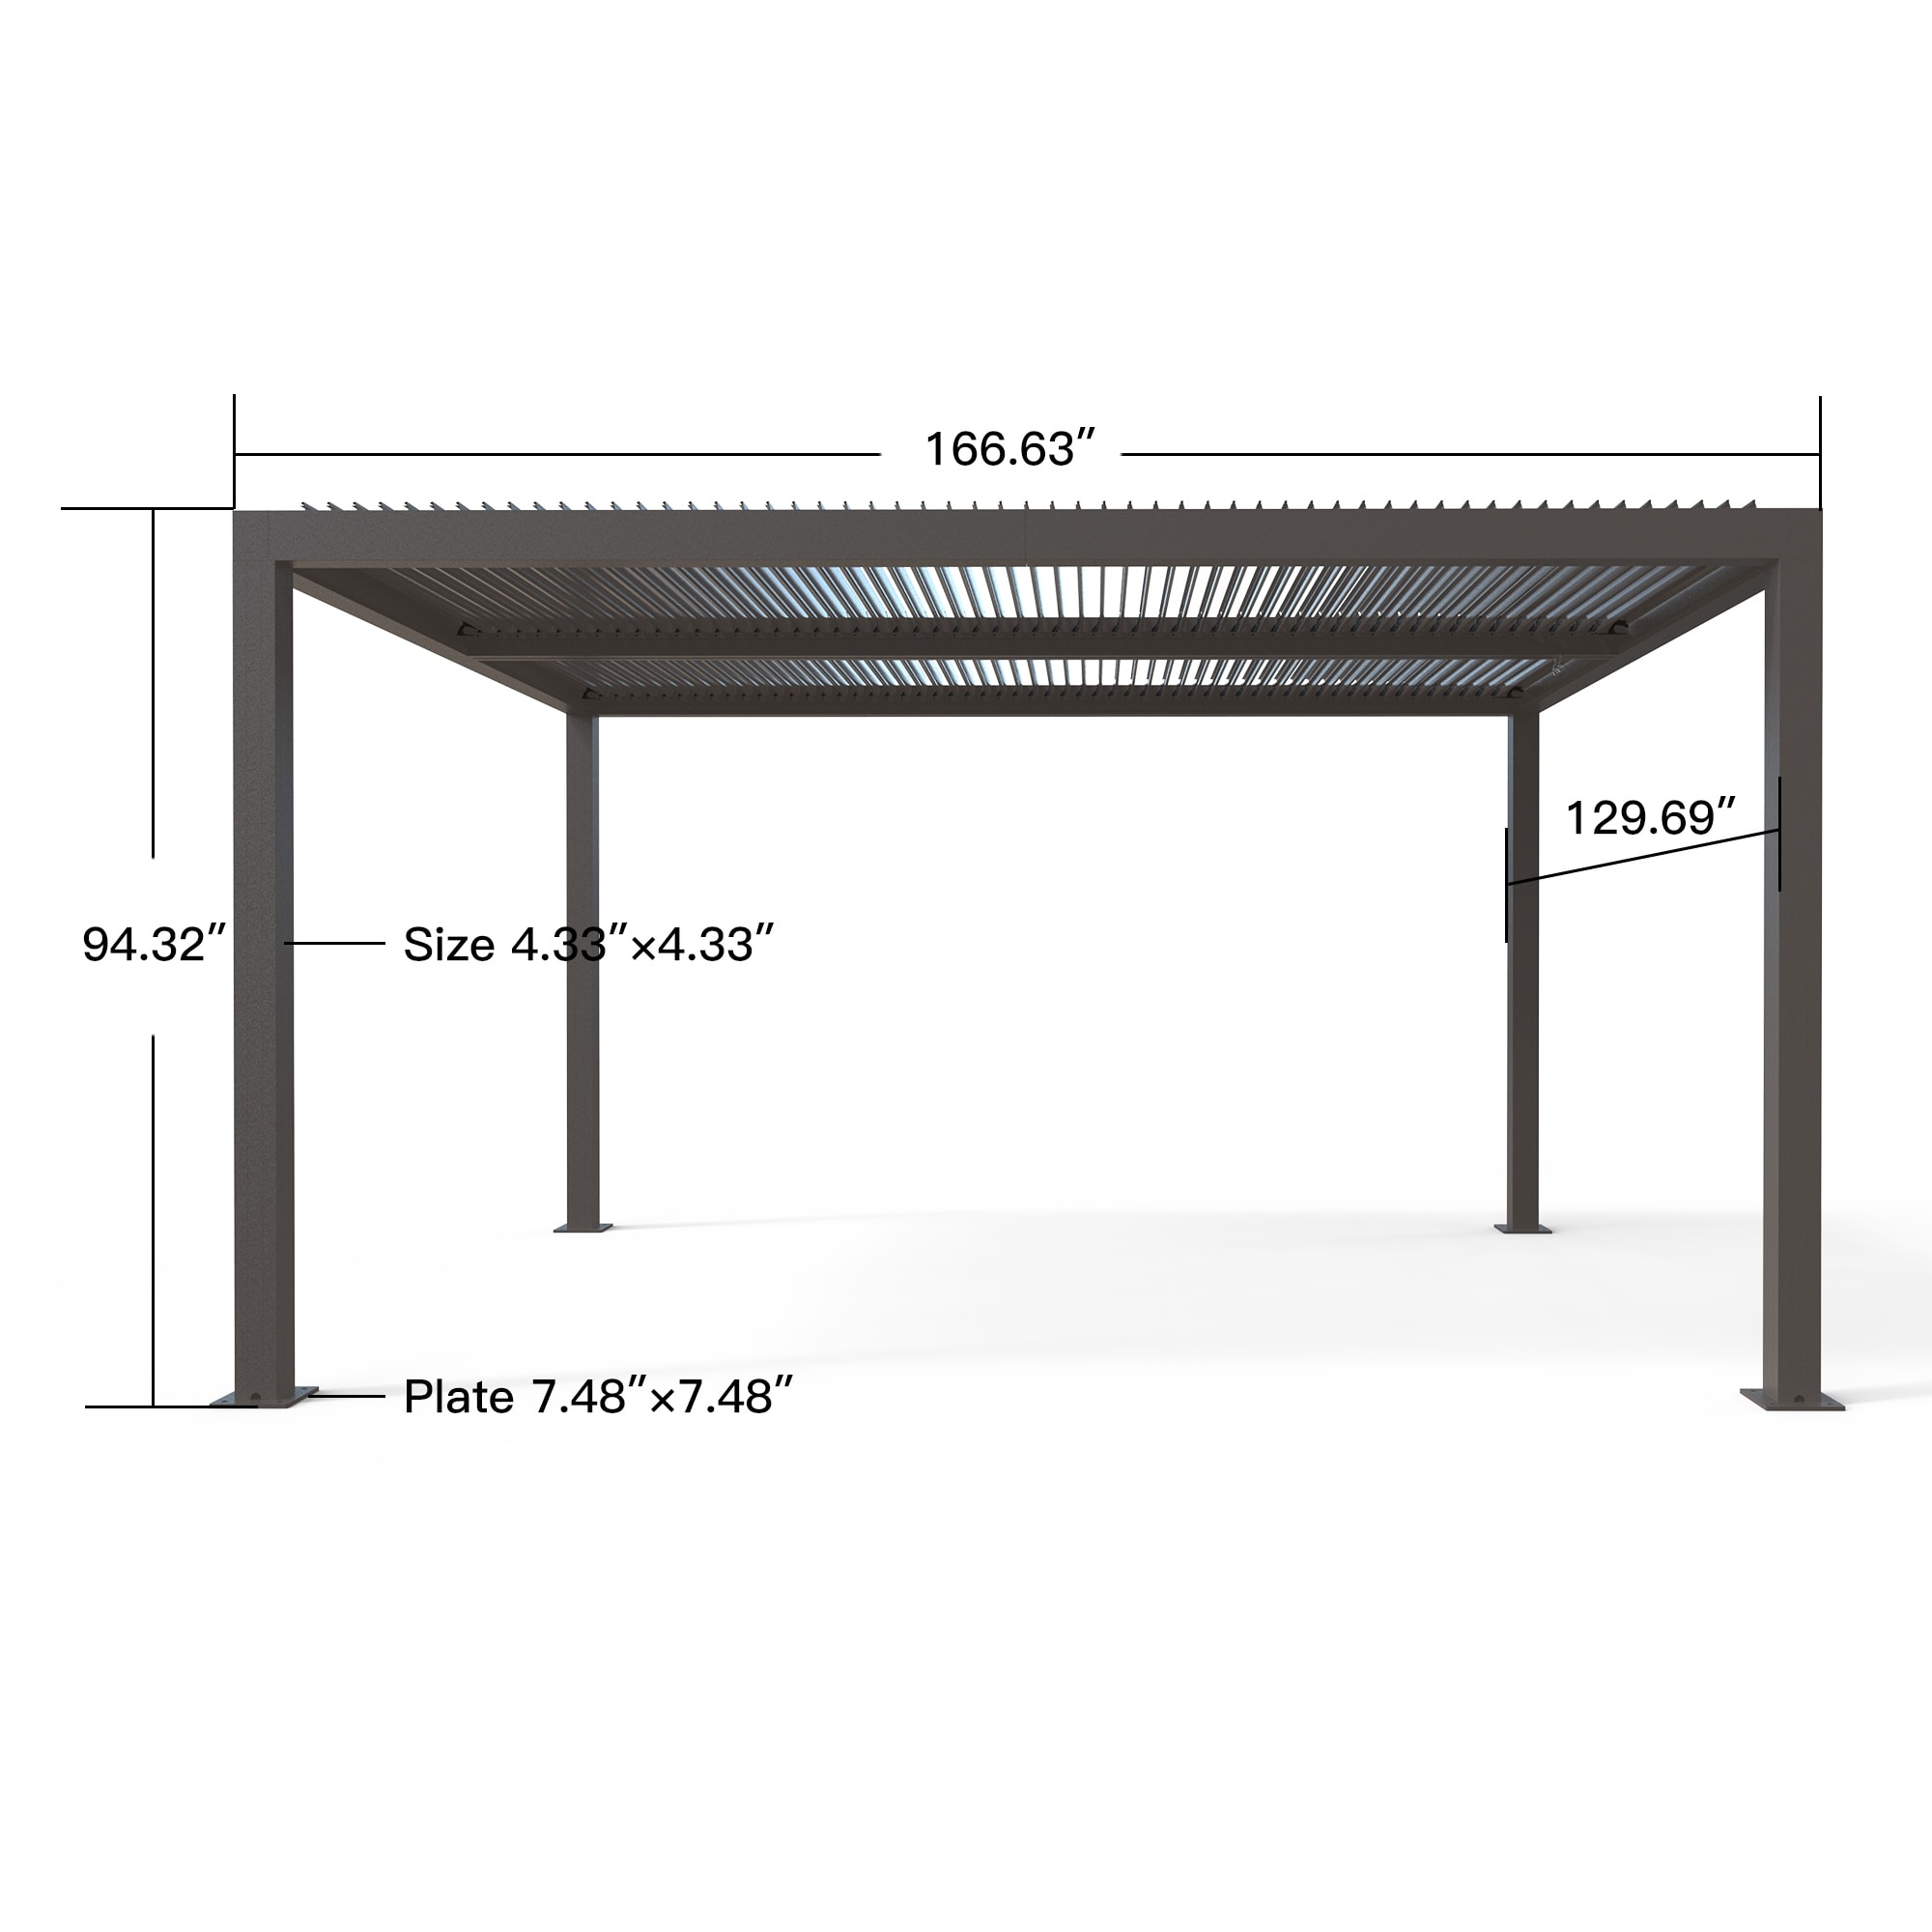 PURPLE LEAF Patio Louvered Pergola 11' × 13' Sun Shade Retractable Canopy Aluminum with Adjustable Roof for Hot Tub